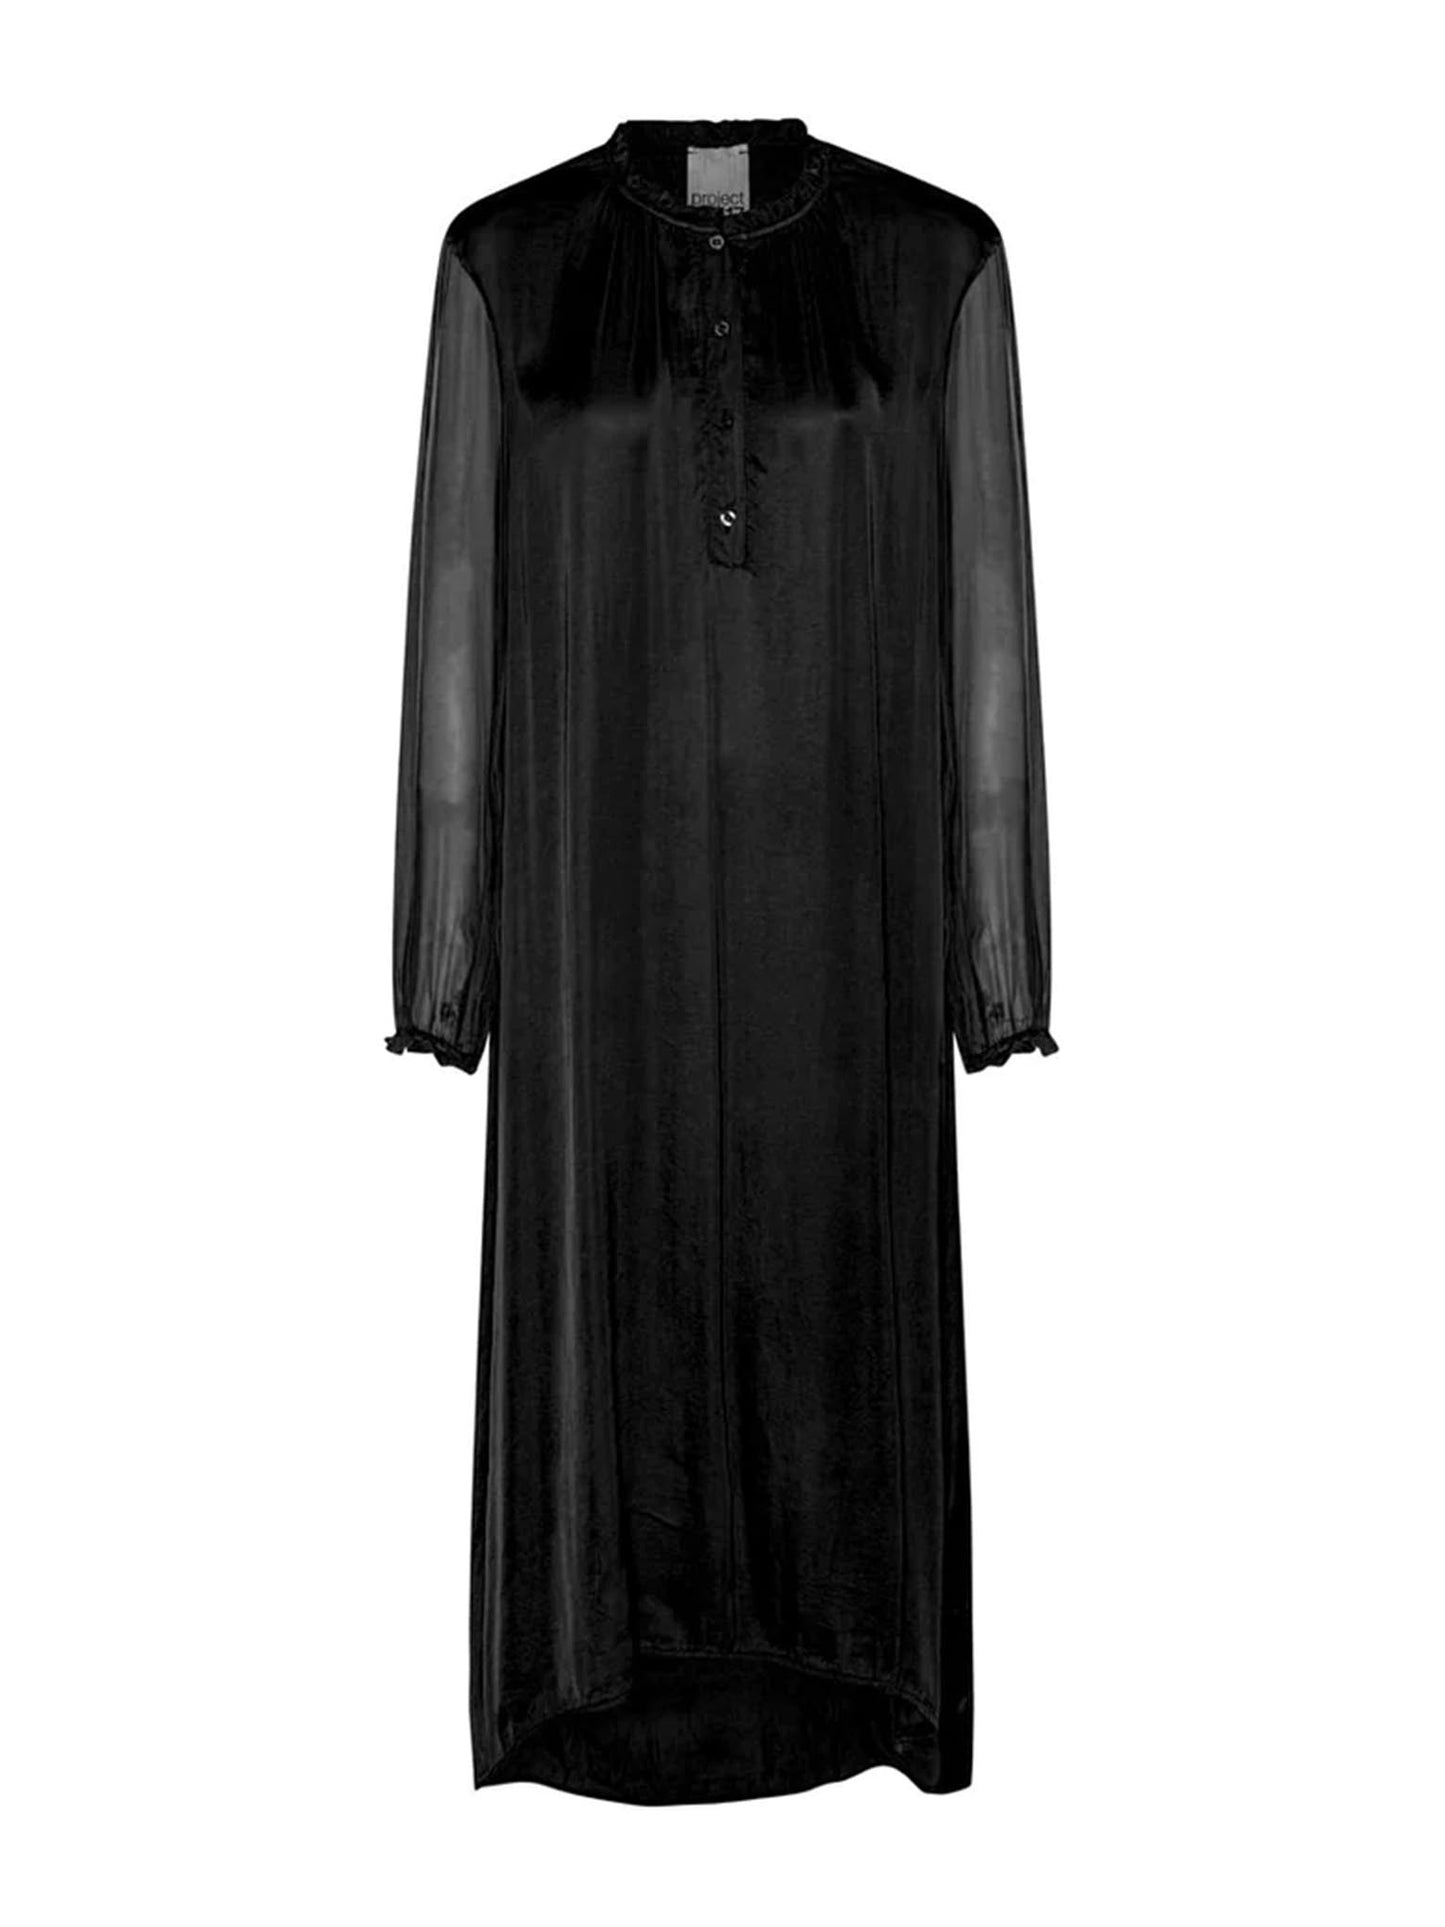 Project AJ117 Thea Black Dress Cutout Front Cutout